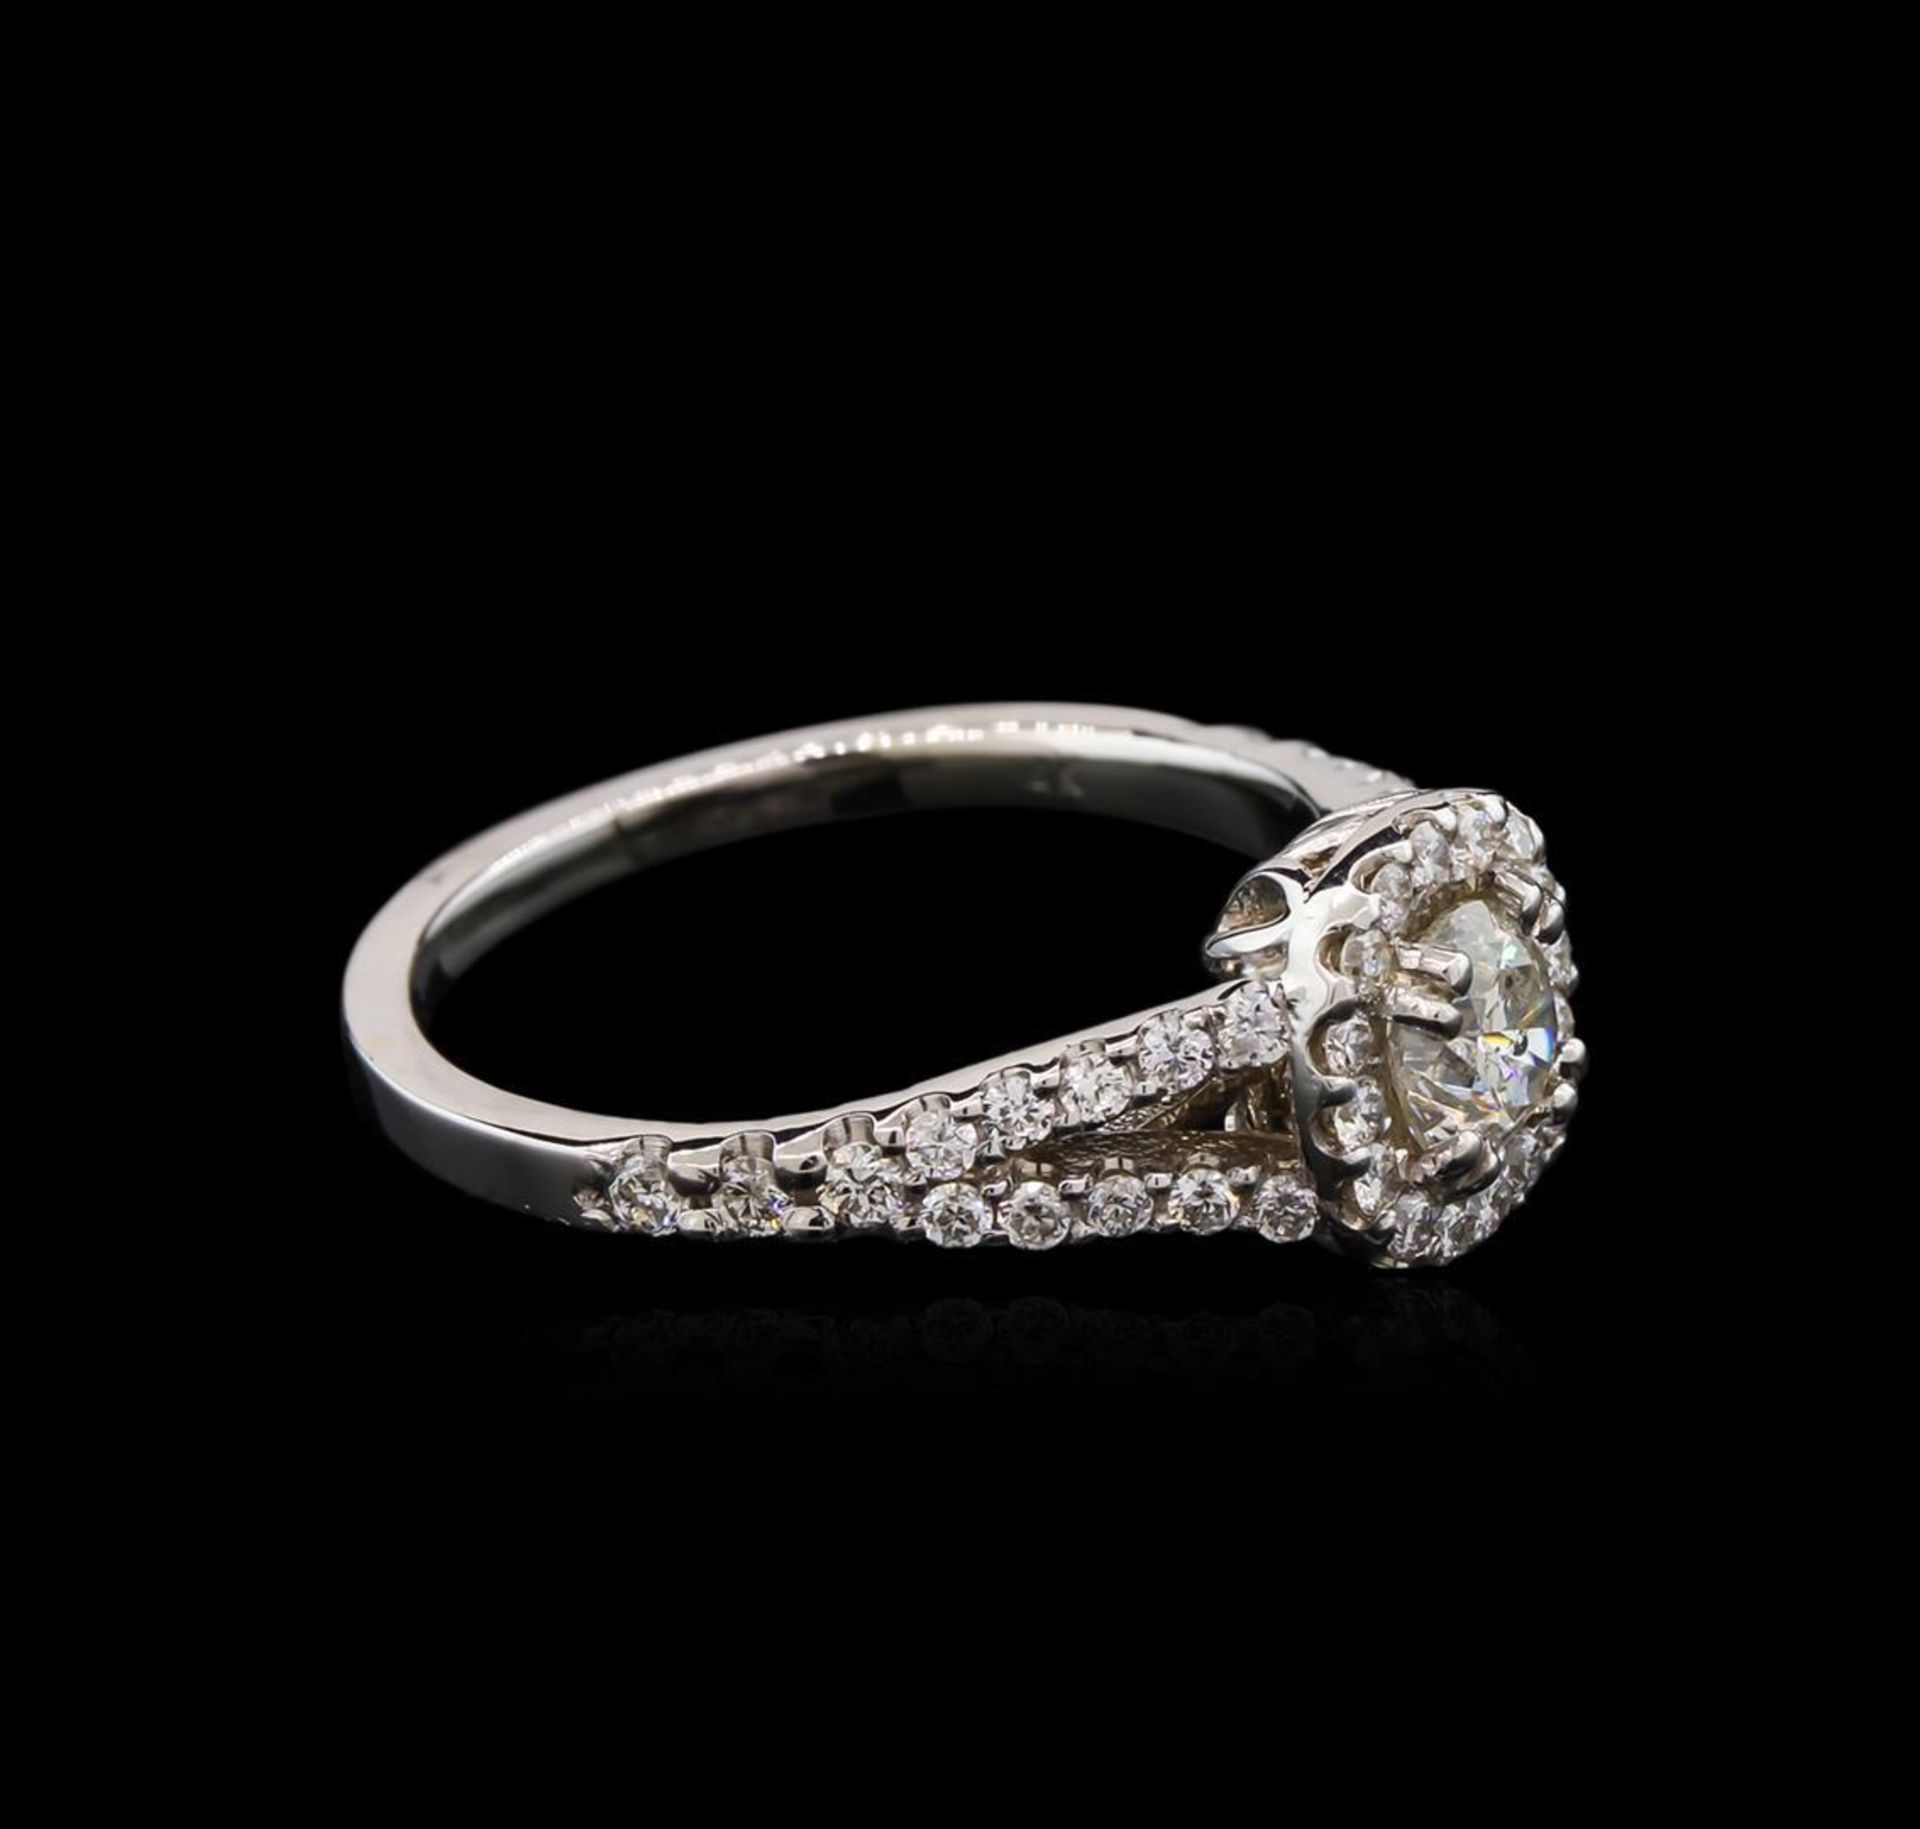 0.96 ctw Diamond Ring - 14KT White Gold - Image 2 of 3